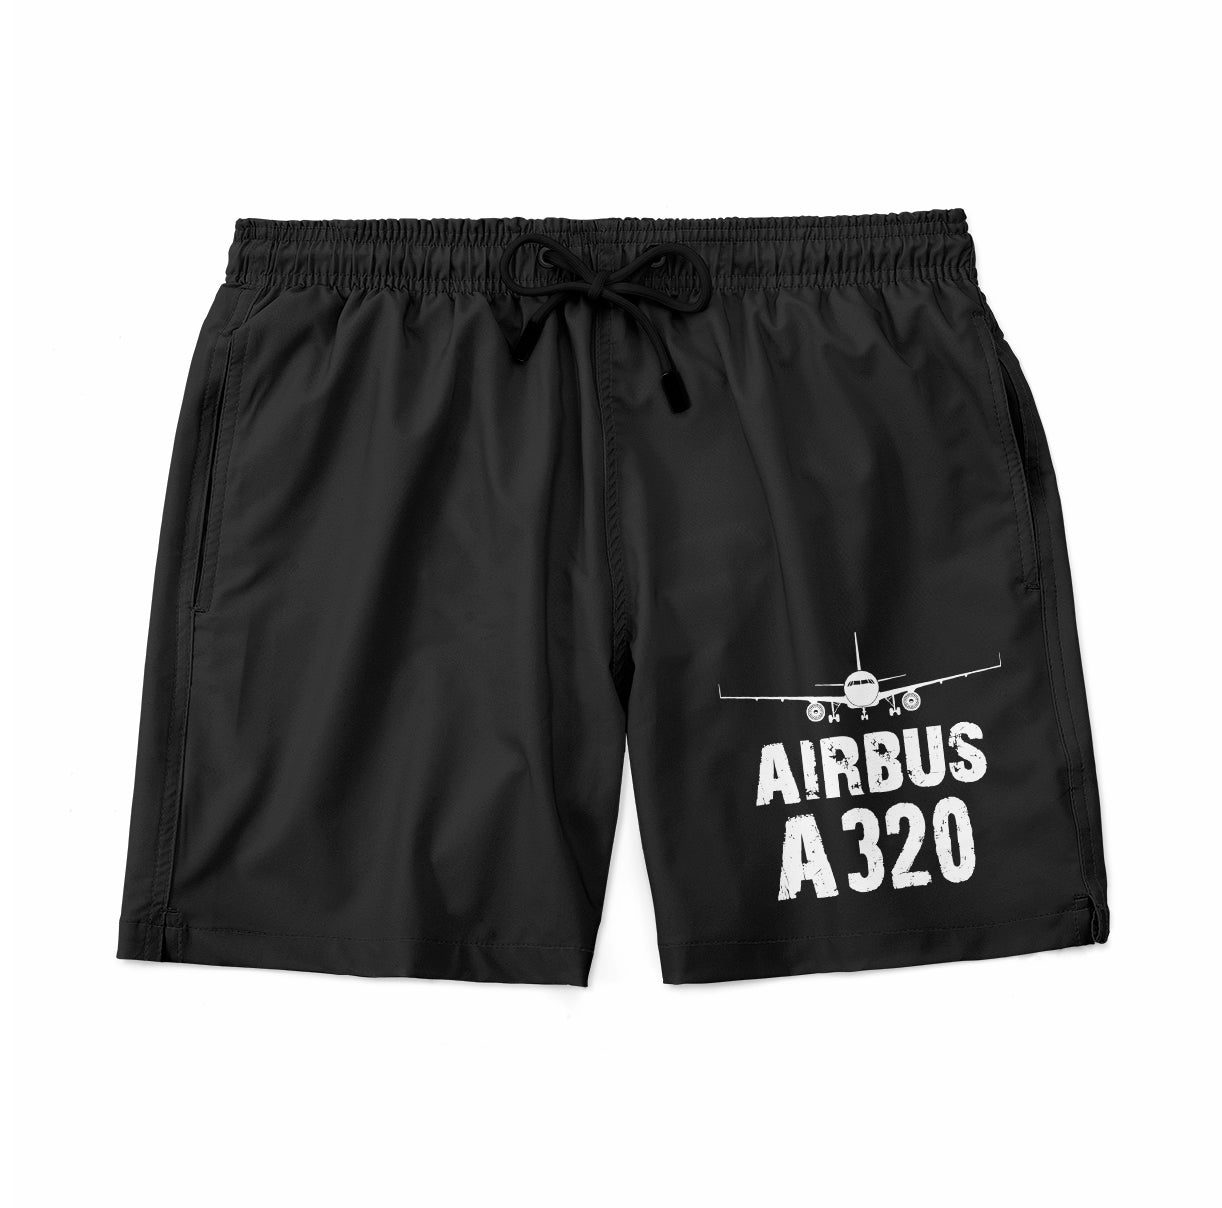 Airbus A320 & Plane Designed Swim Trunks & Shorts